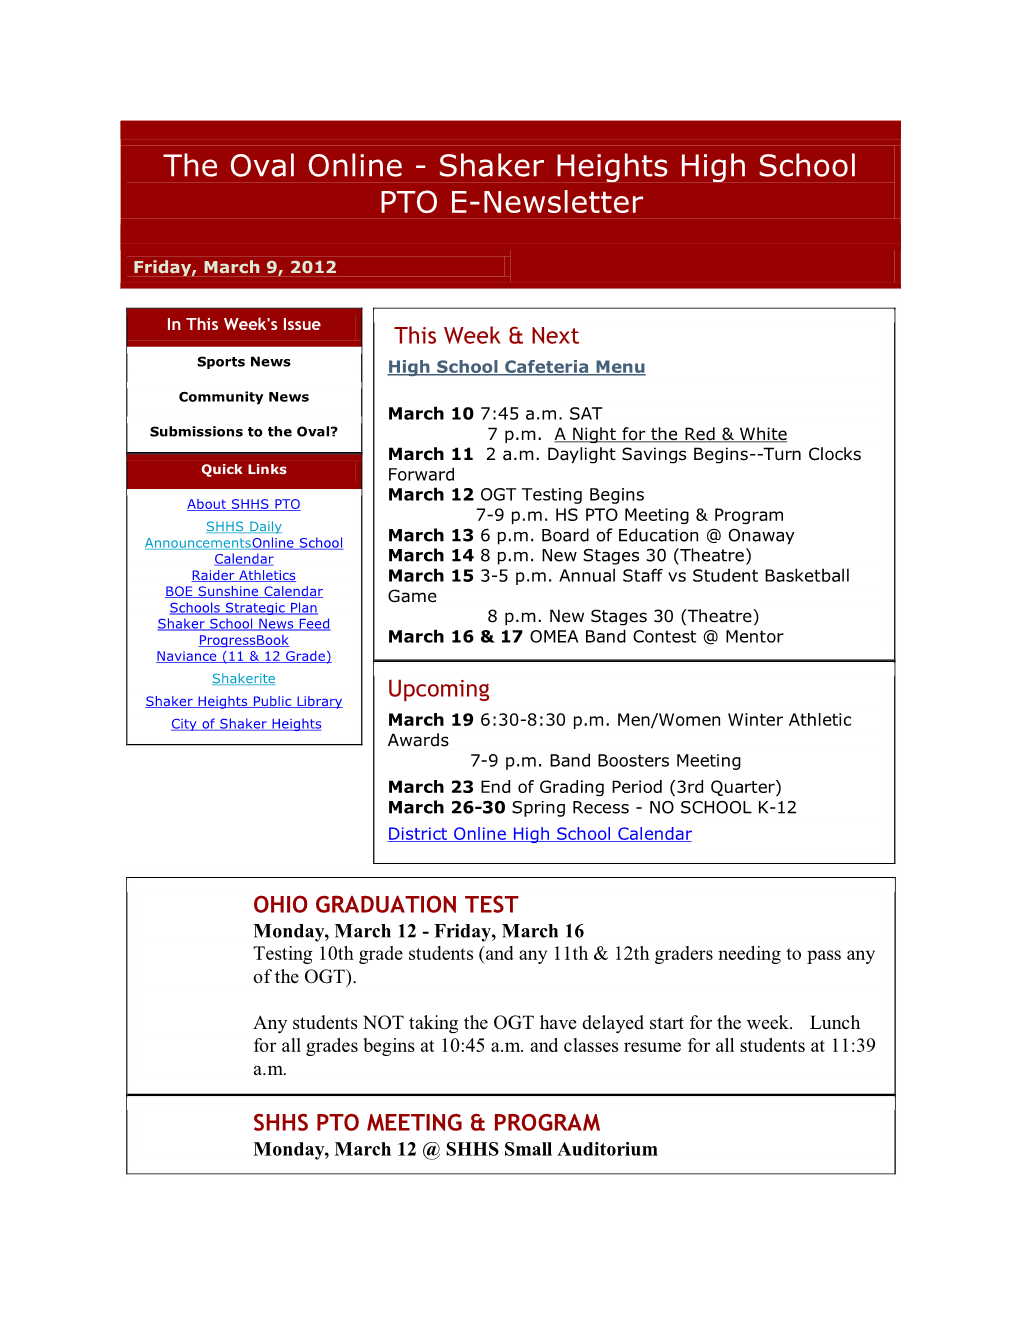 The Oval Online - Shaker Heights High School PTO E-Newsletter